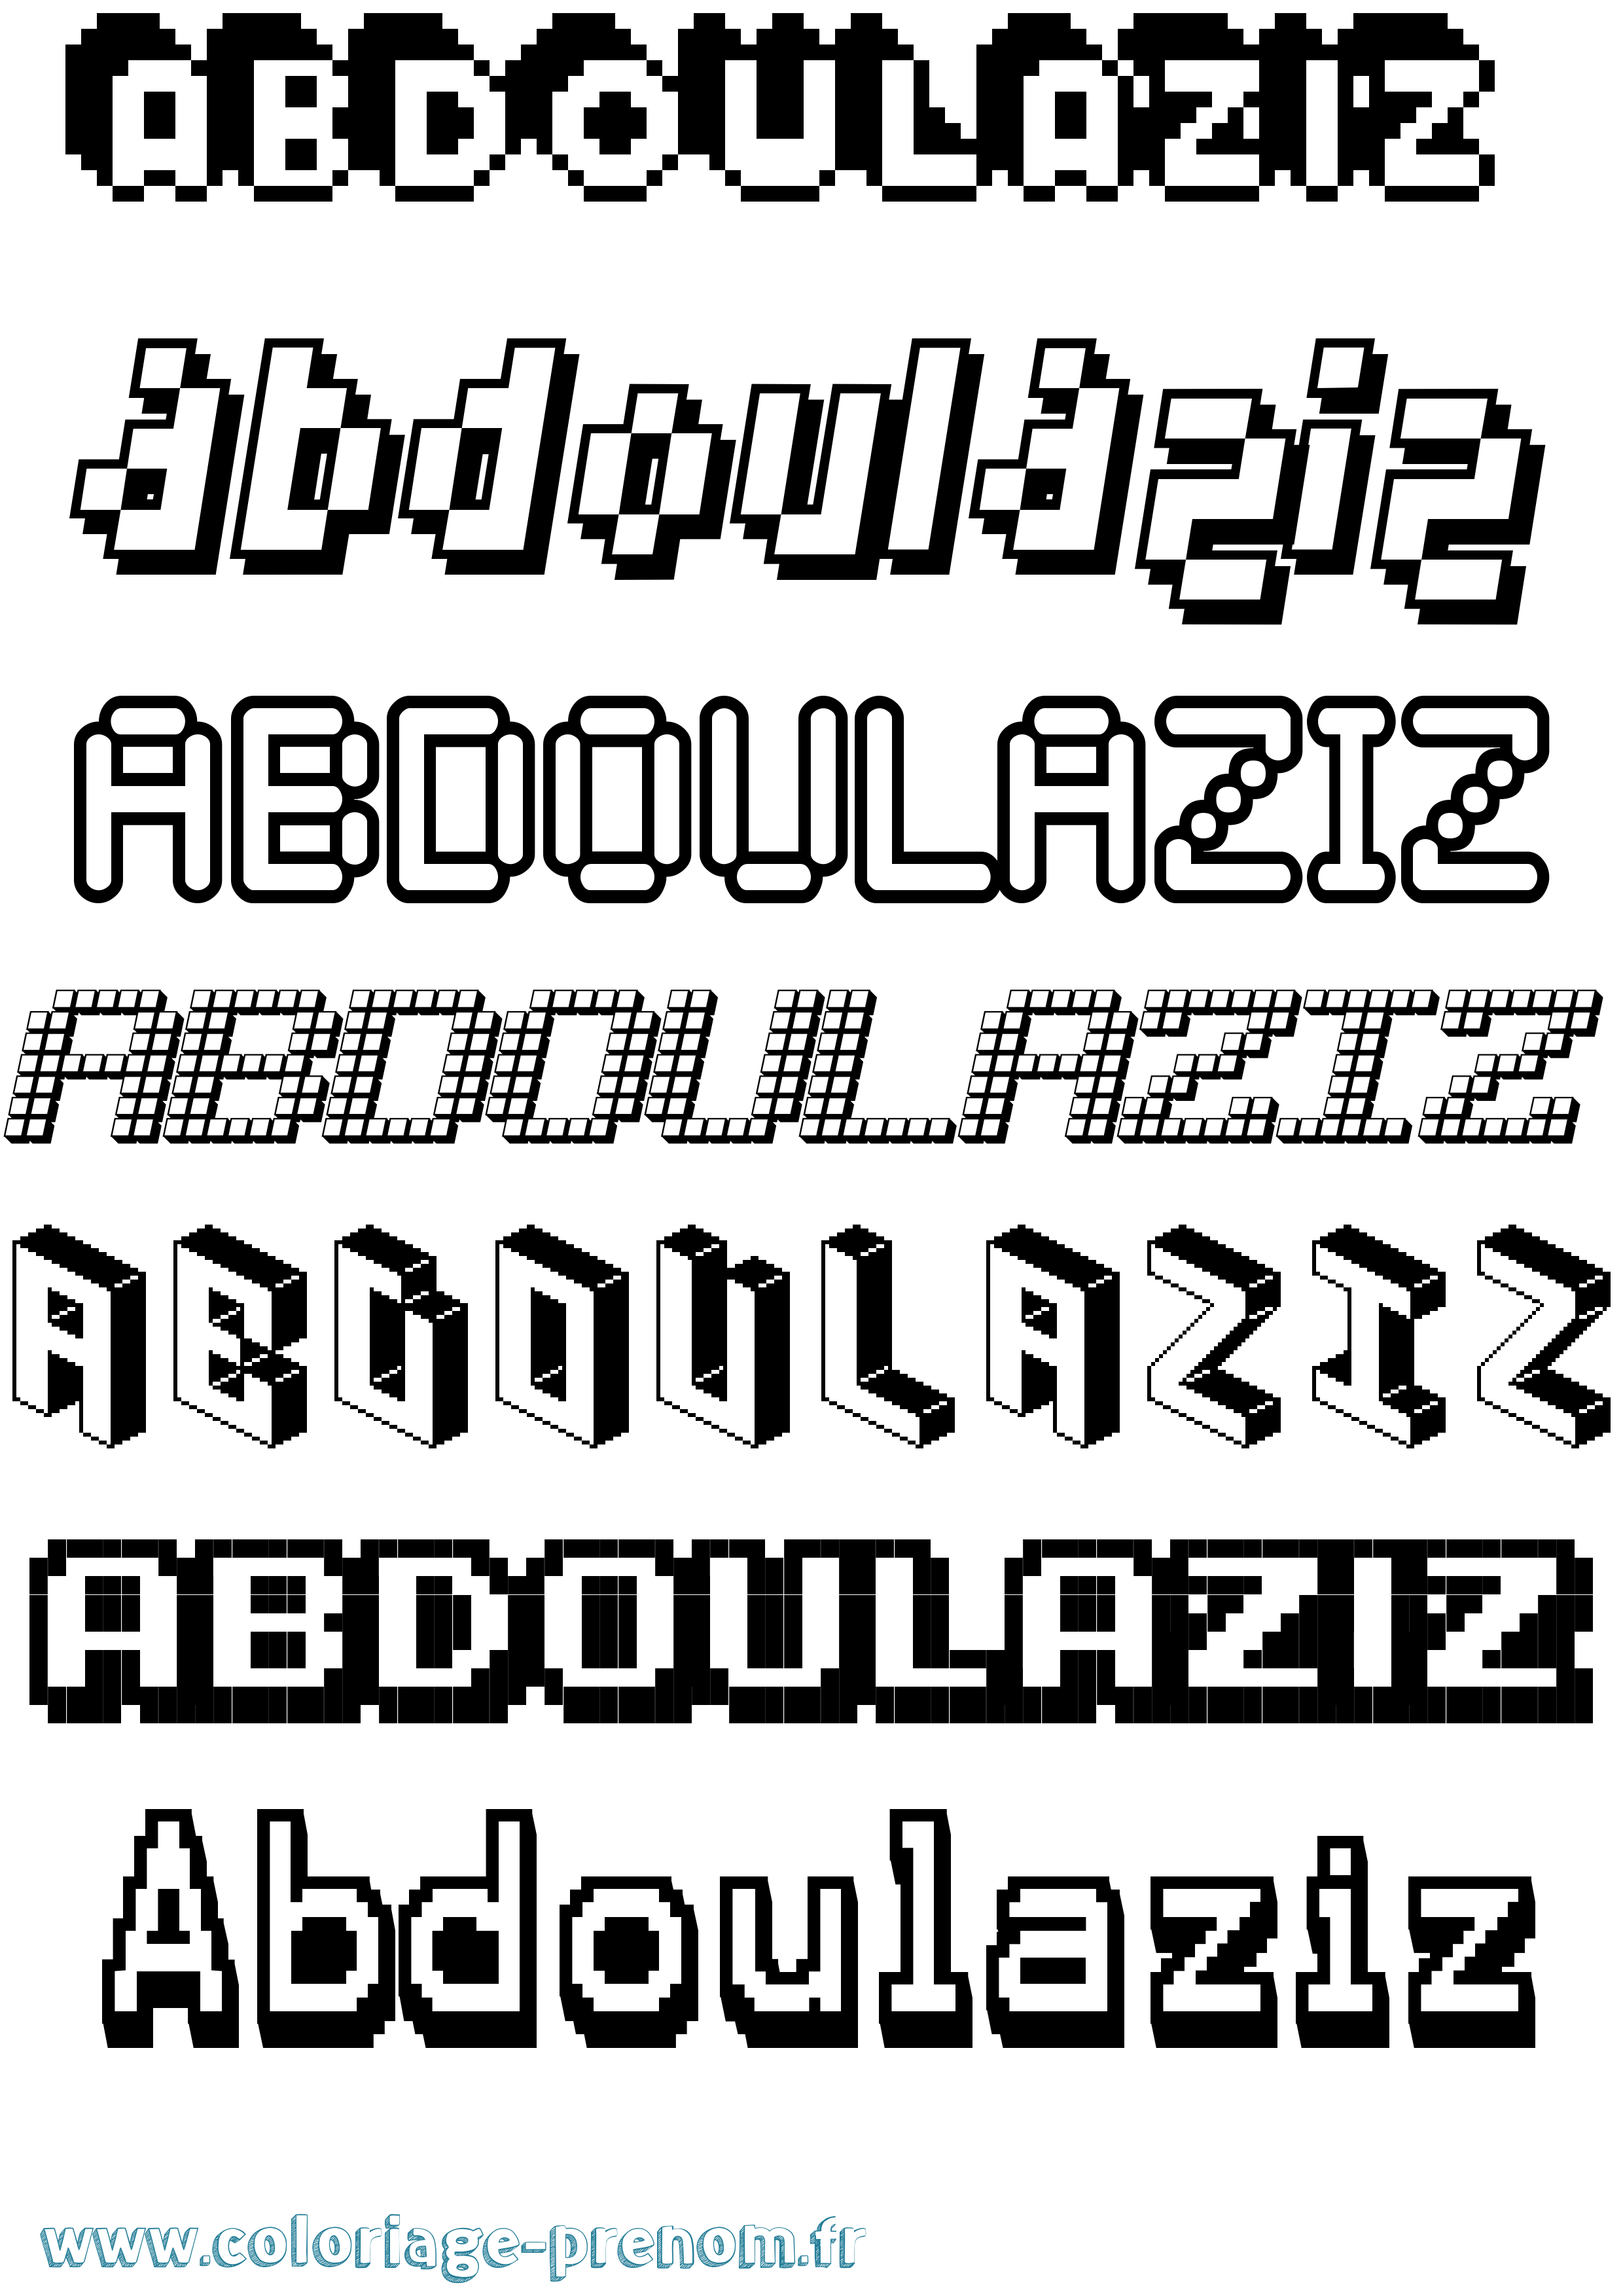 Coloriage prénom Abdoulaziz Pixel